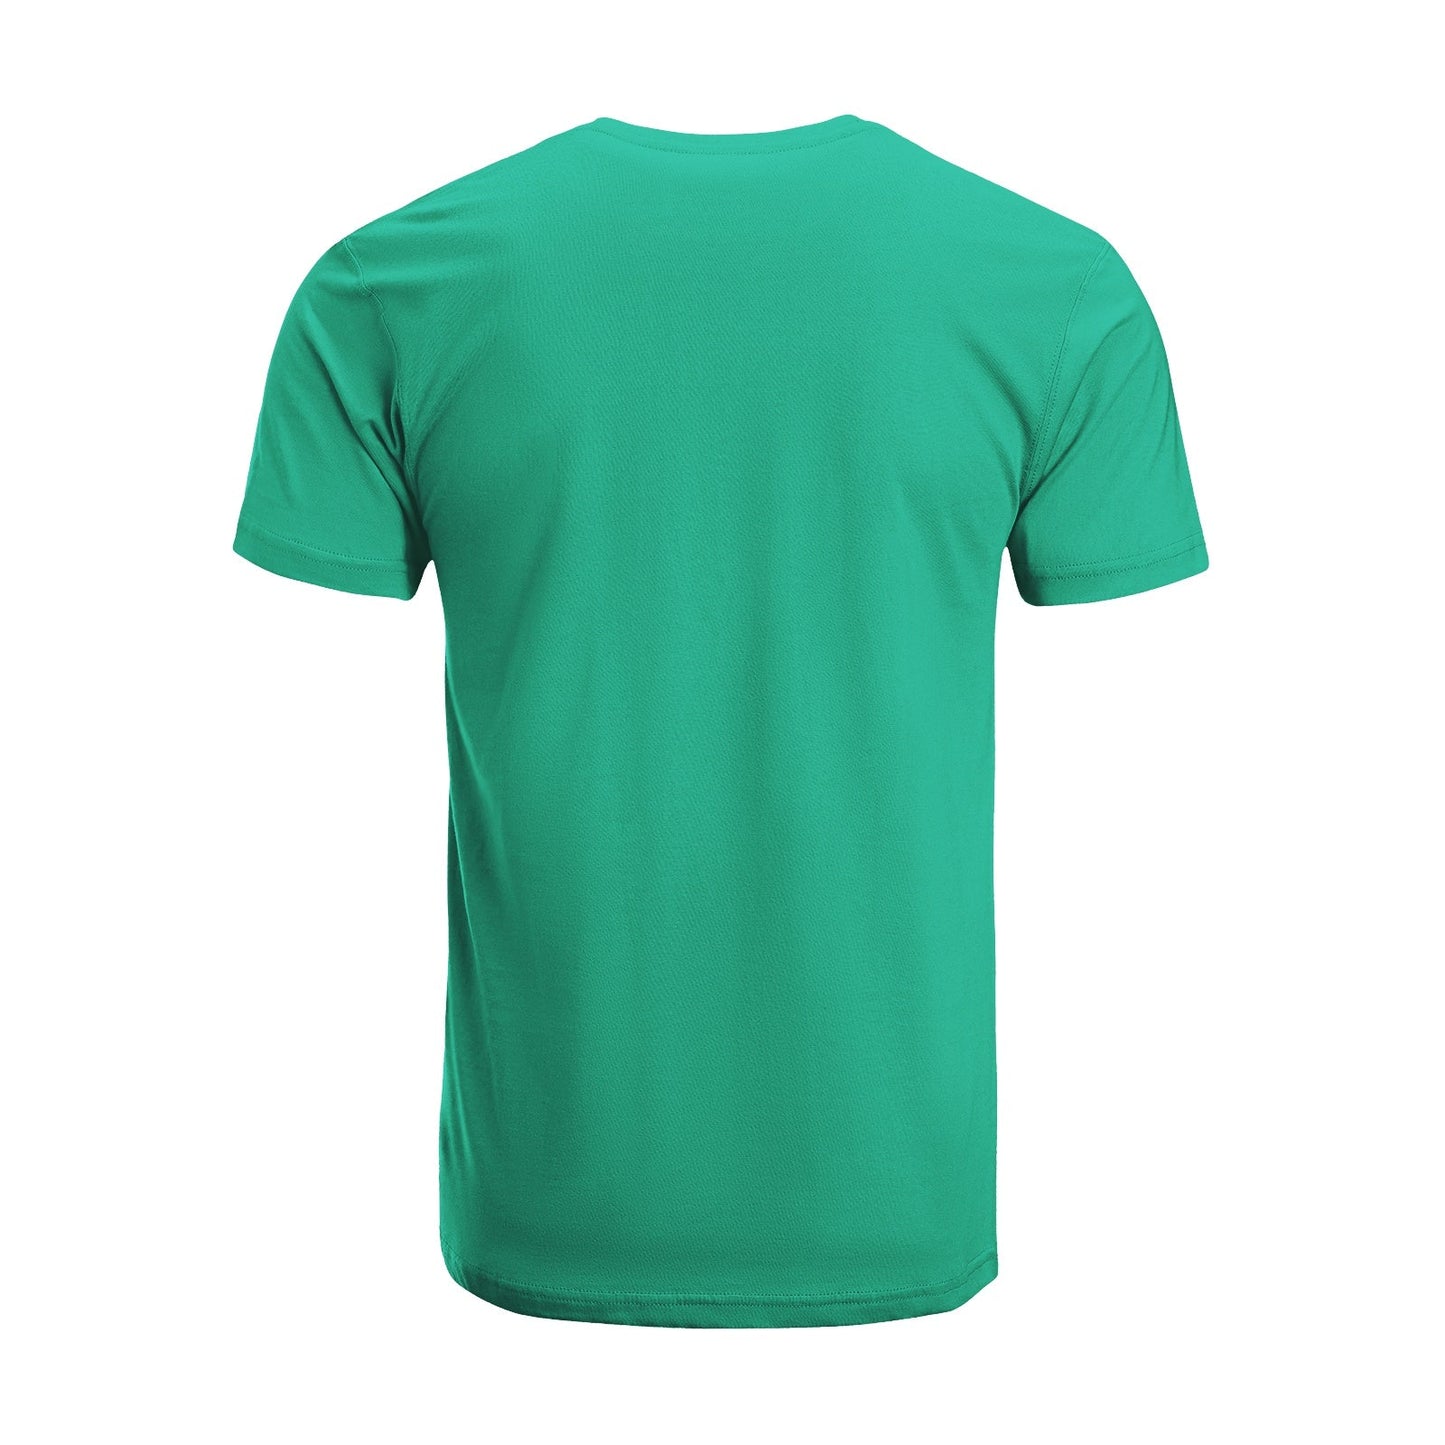 Unisex Short Sleeve Crew Neck Cotton Jersey T-Shirt MOM 50